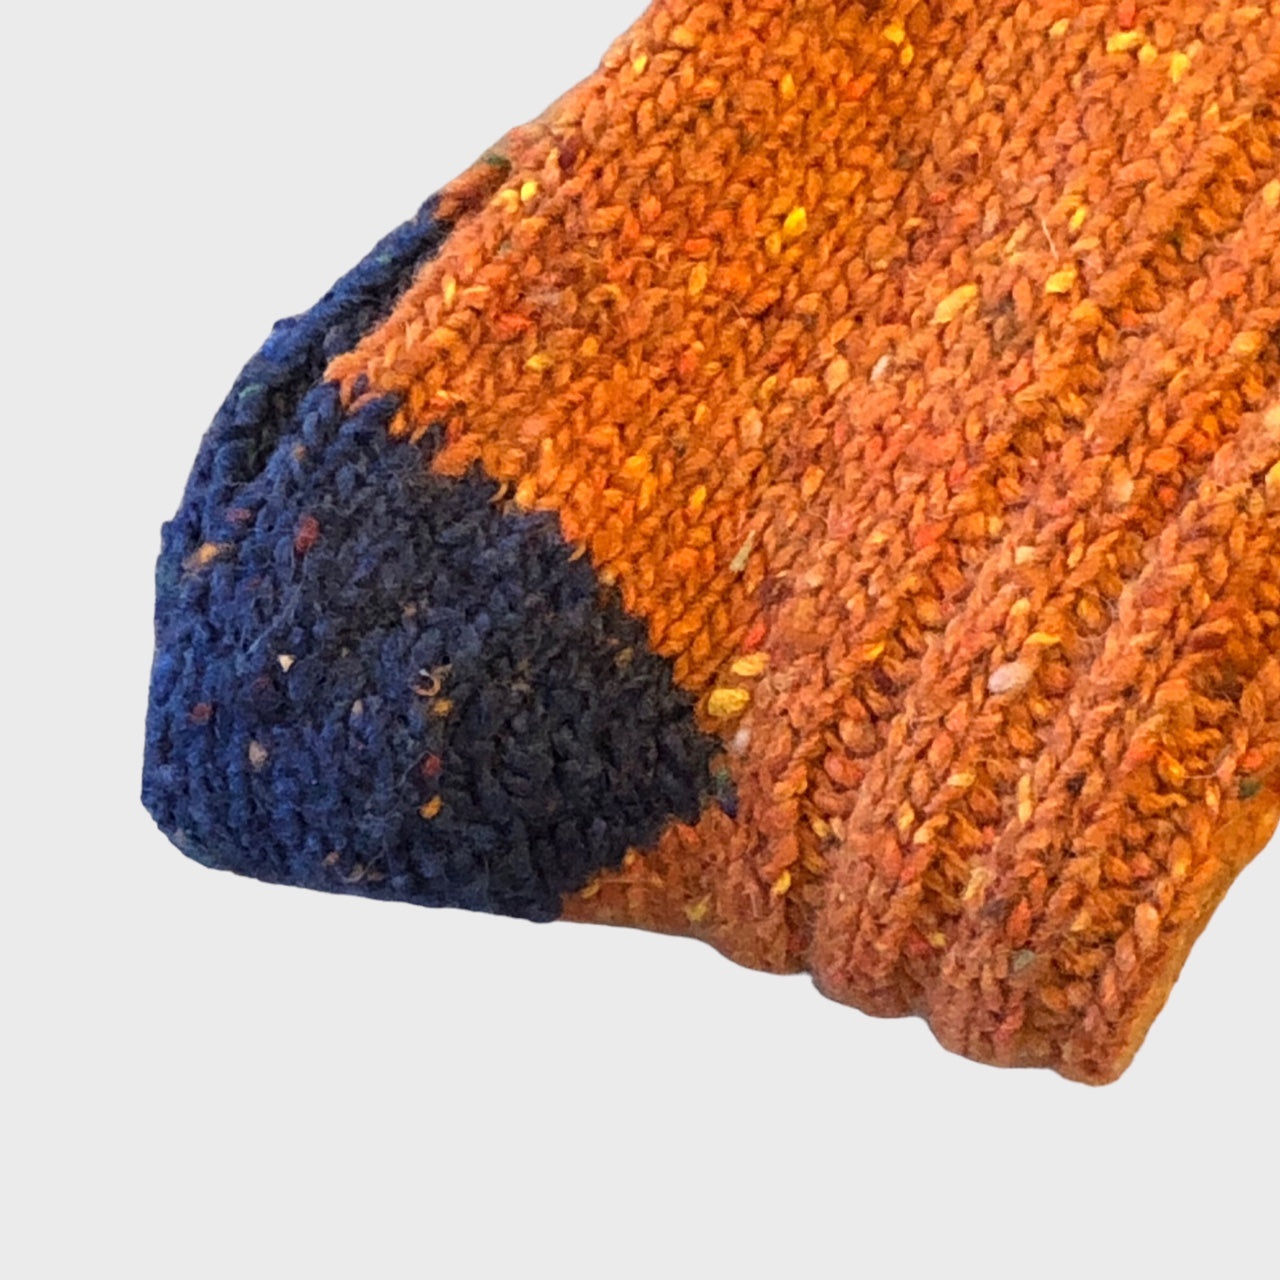 Connemara - Heavy Donegal Orange Socks